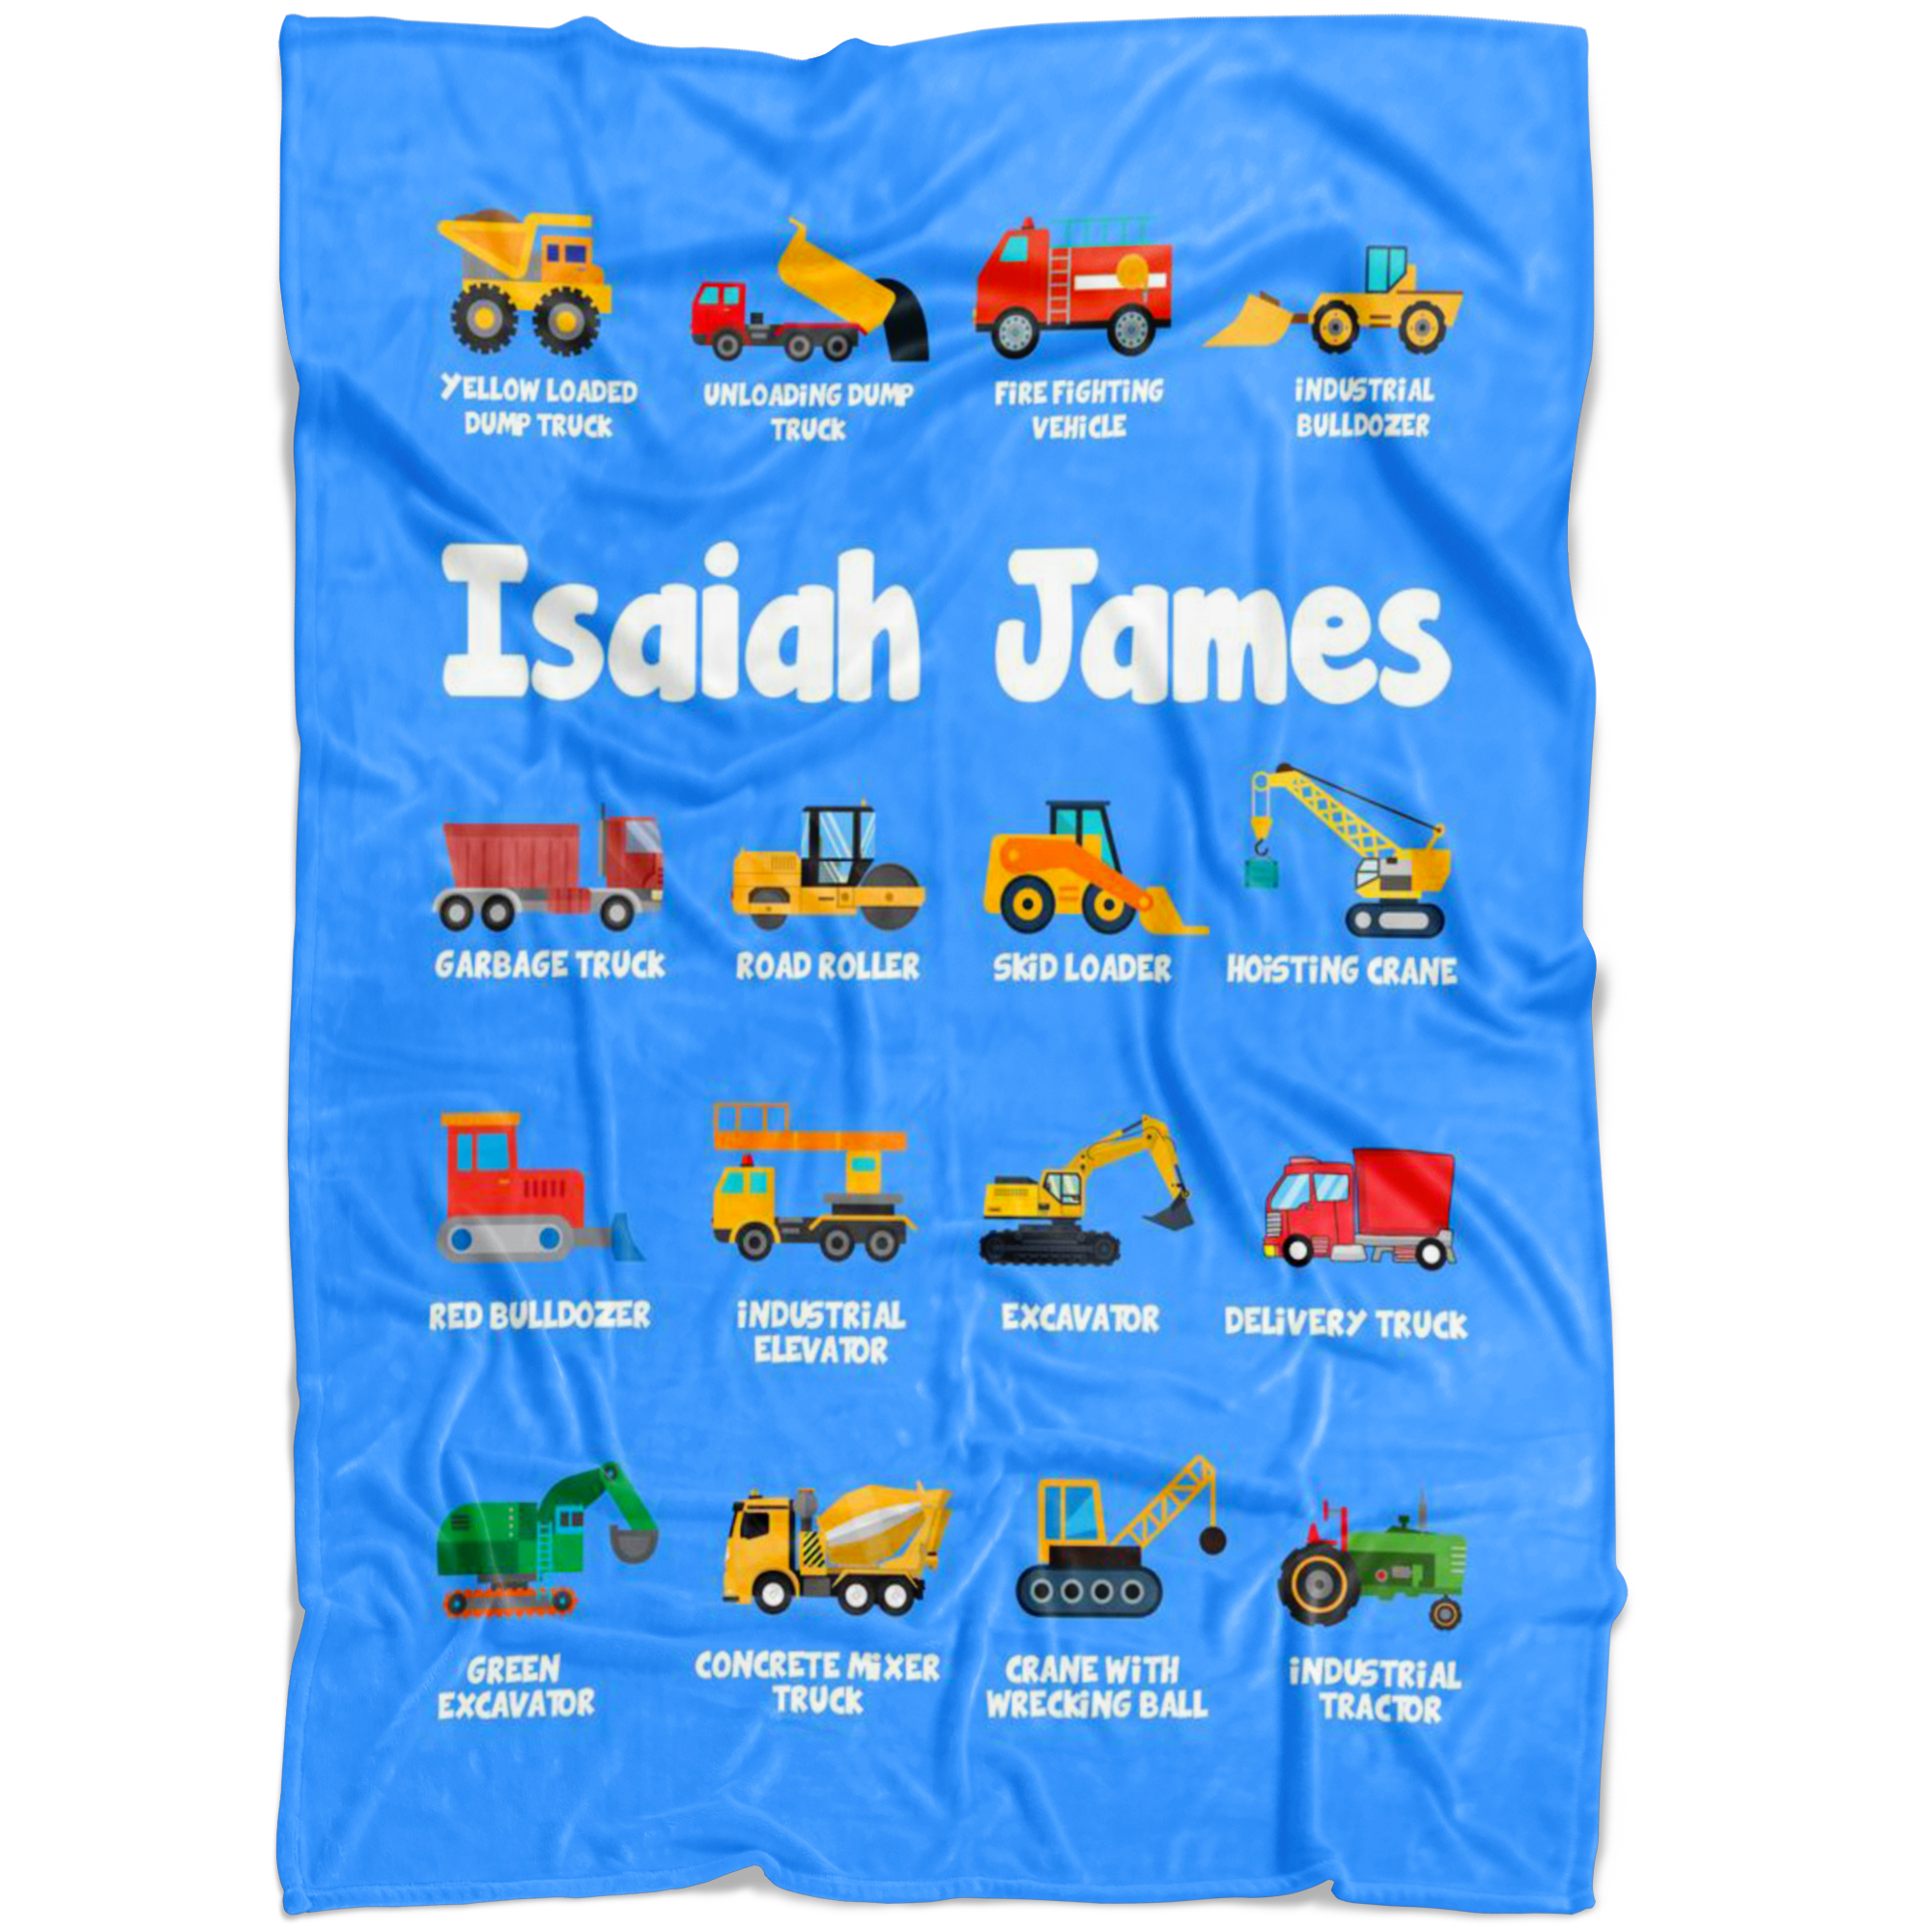 Isaiah James Construction Blanket Blue